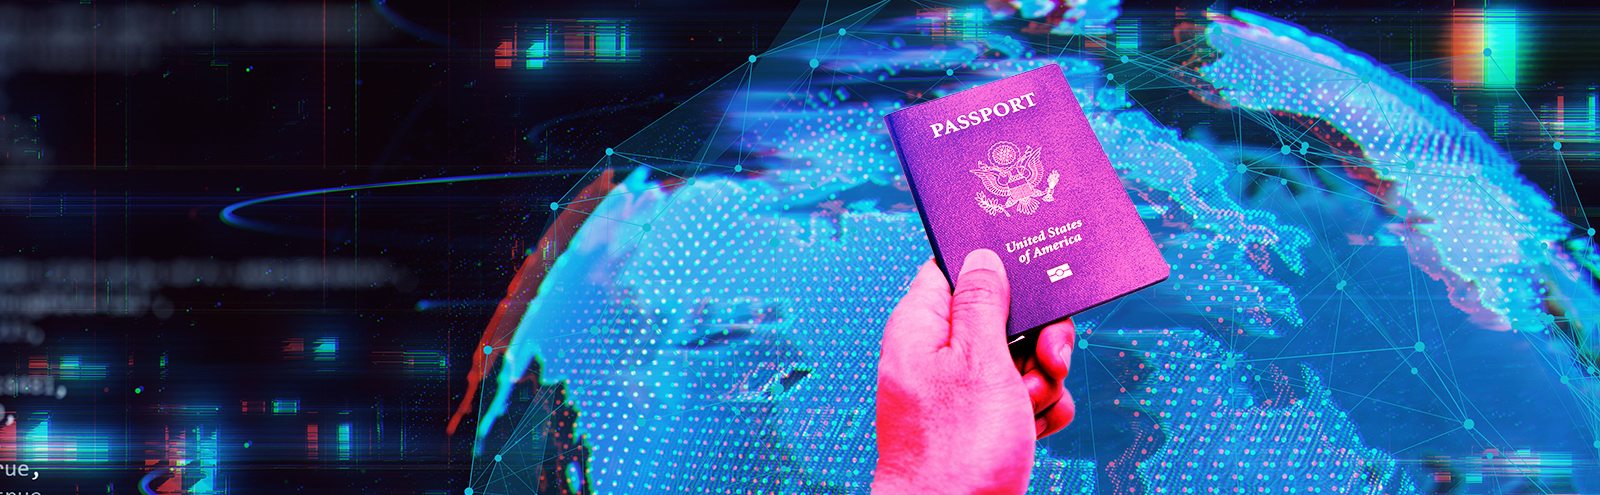 passport-tfeat-uproxx.jpg